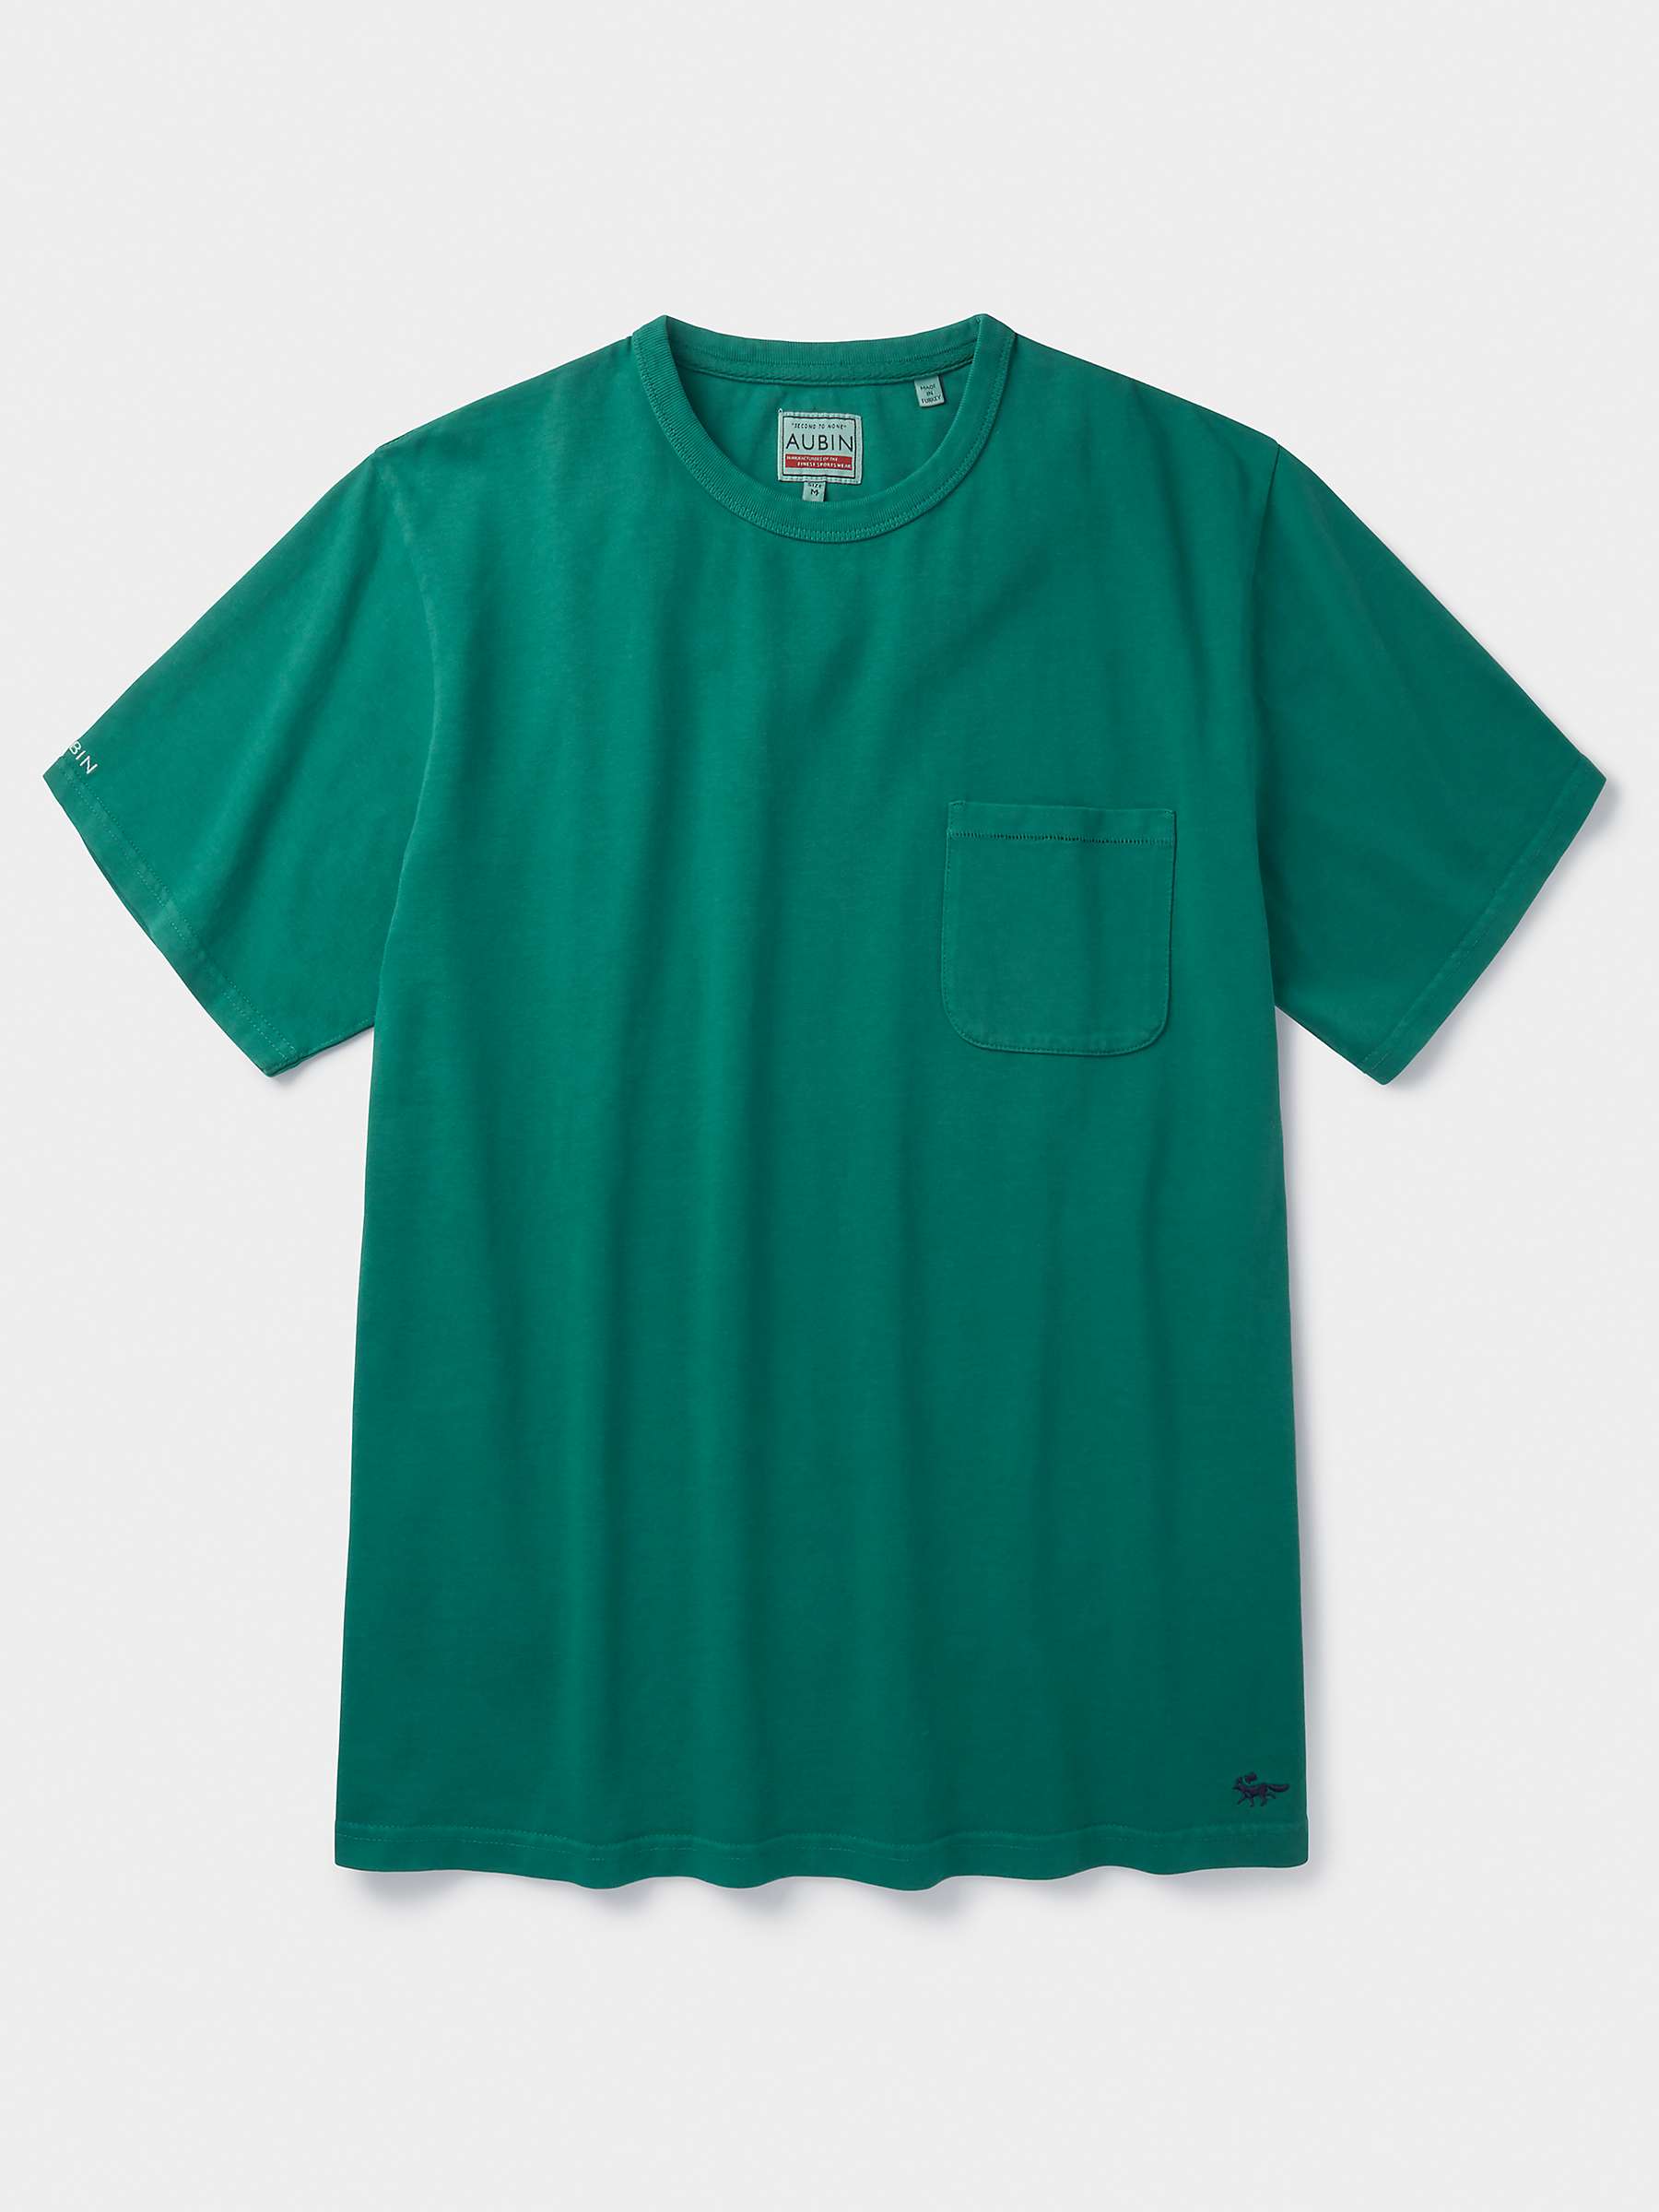 Buy Aubin Newburgh Relaxed Pocket T-Shirt Online at johnlewis.com